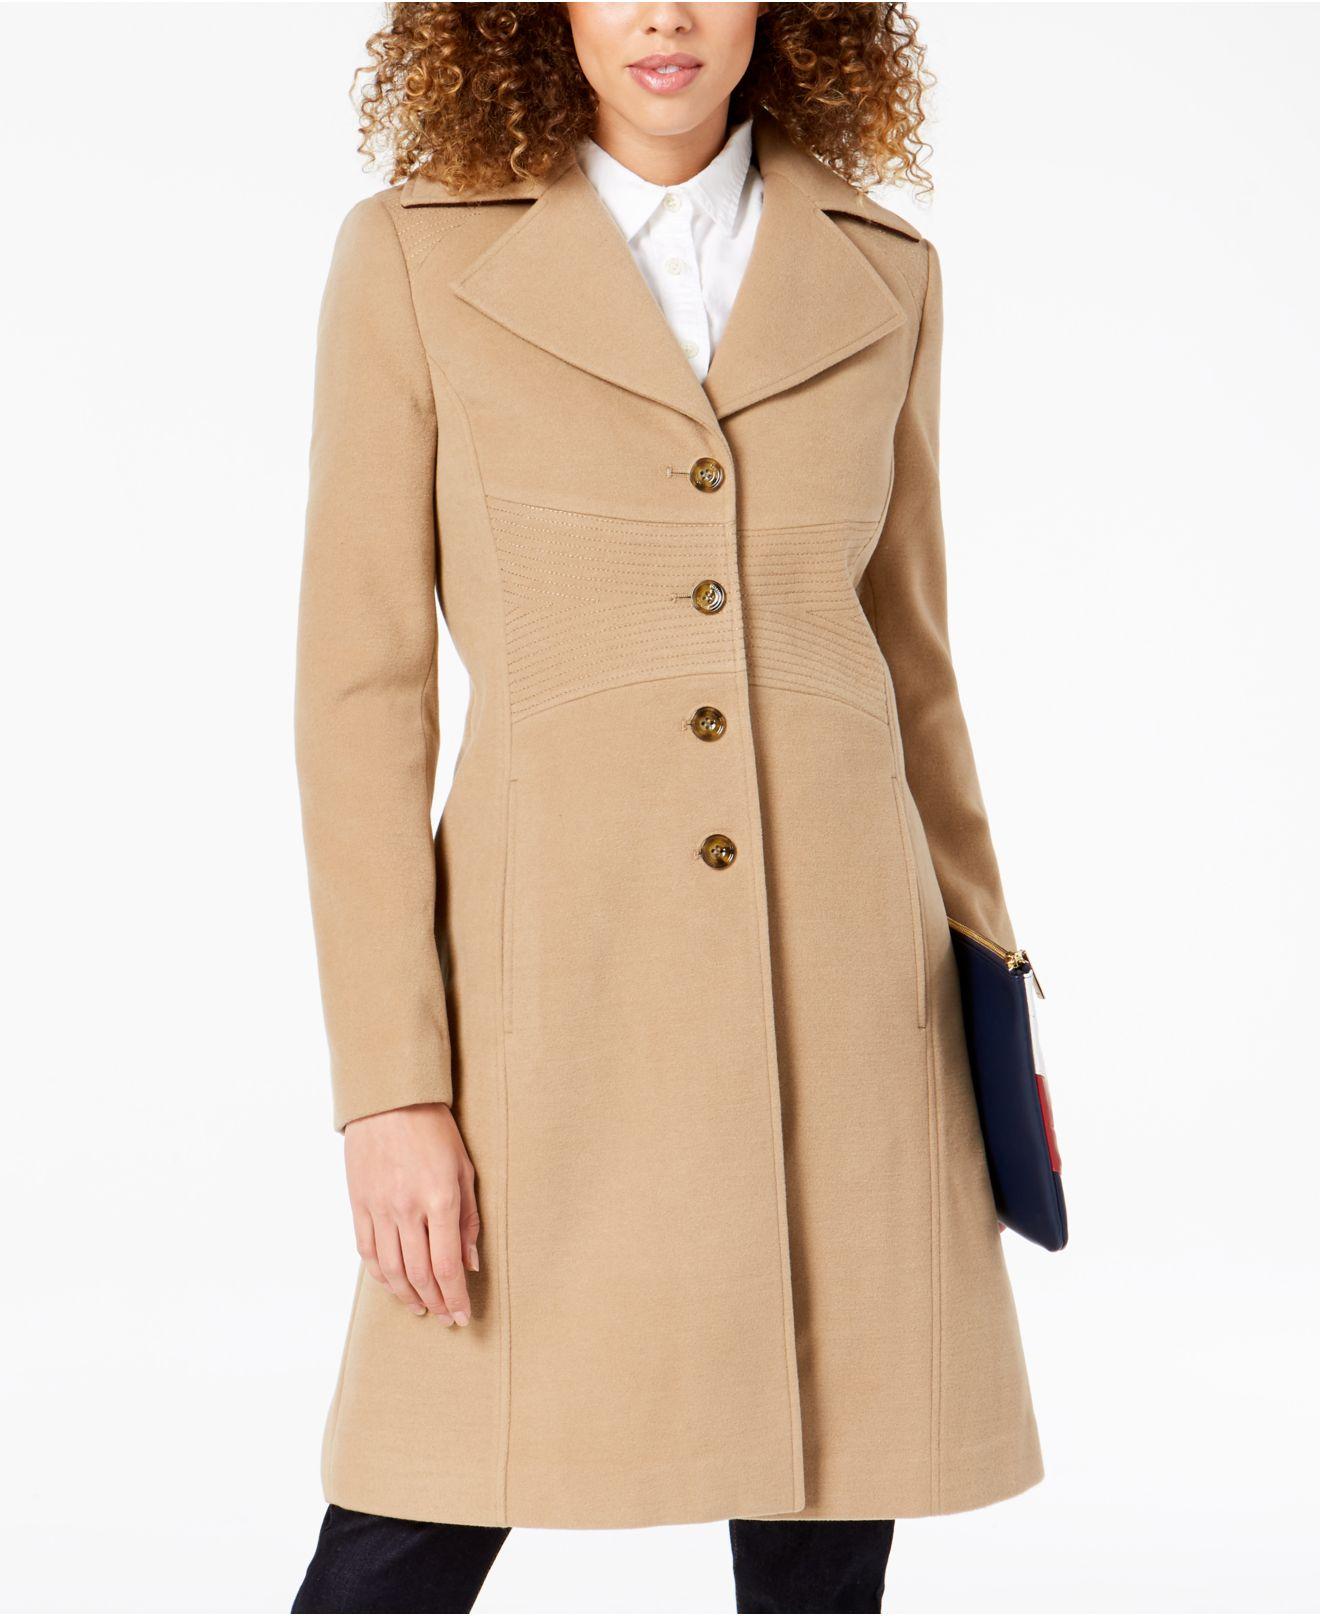 Howme Womens Lapel Long Classics Wool-Blend Slim Fitted Walker Coat